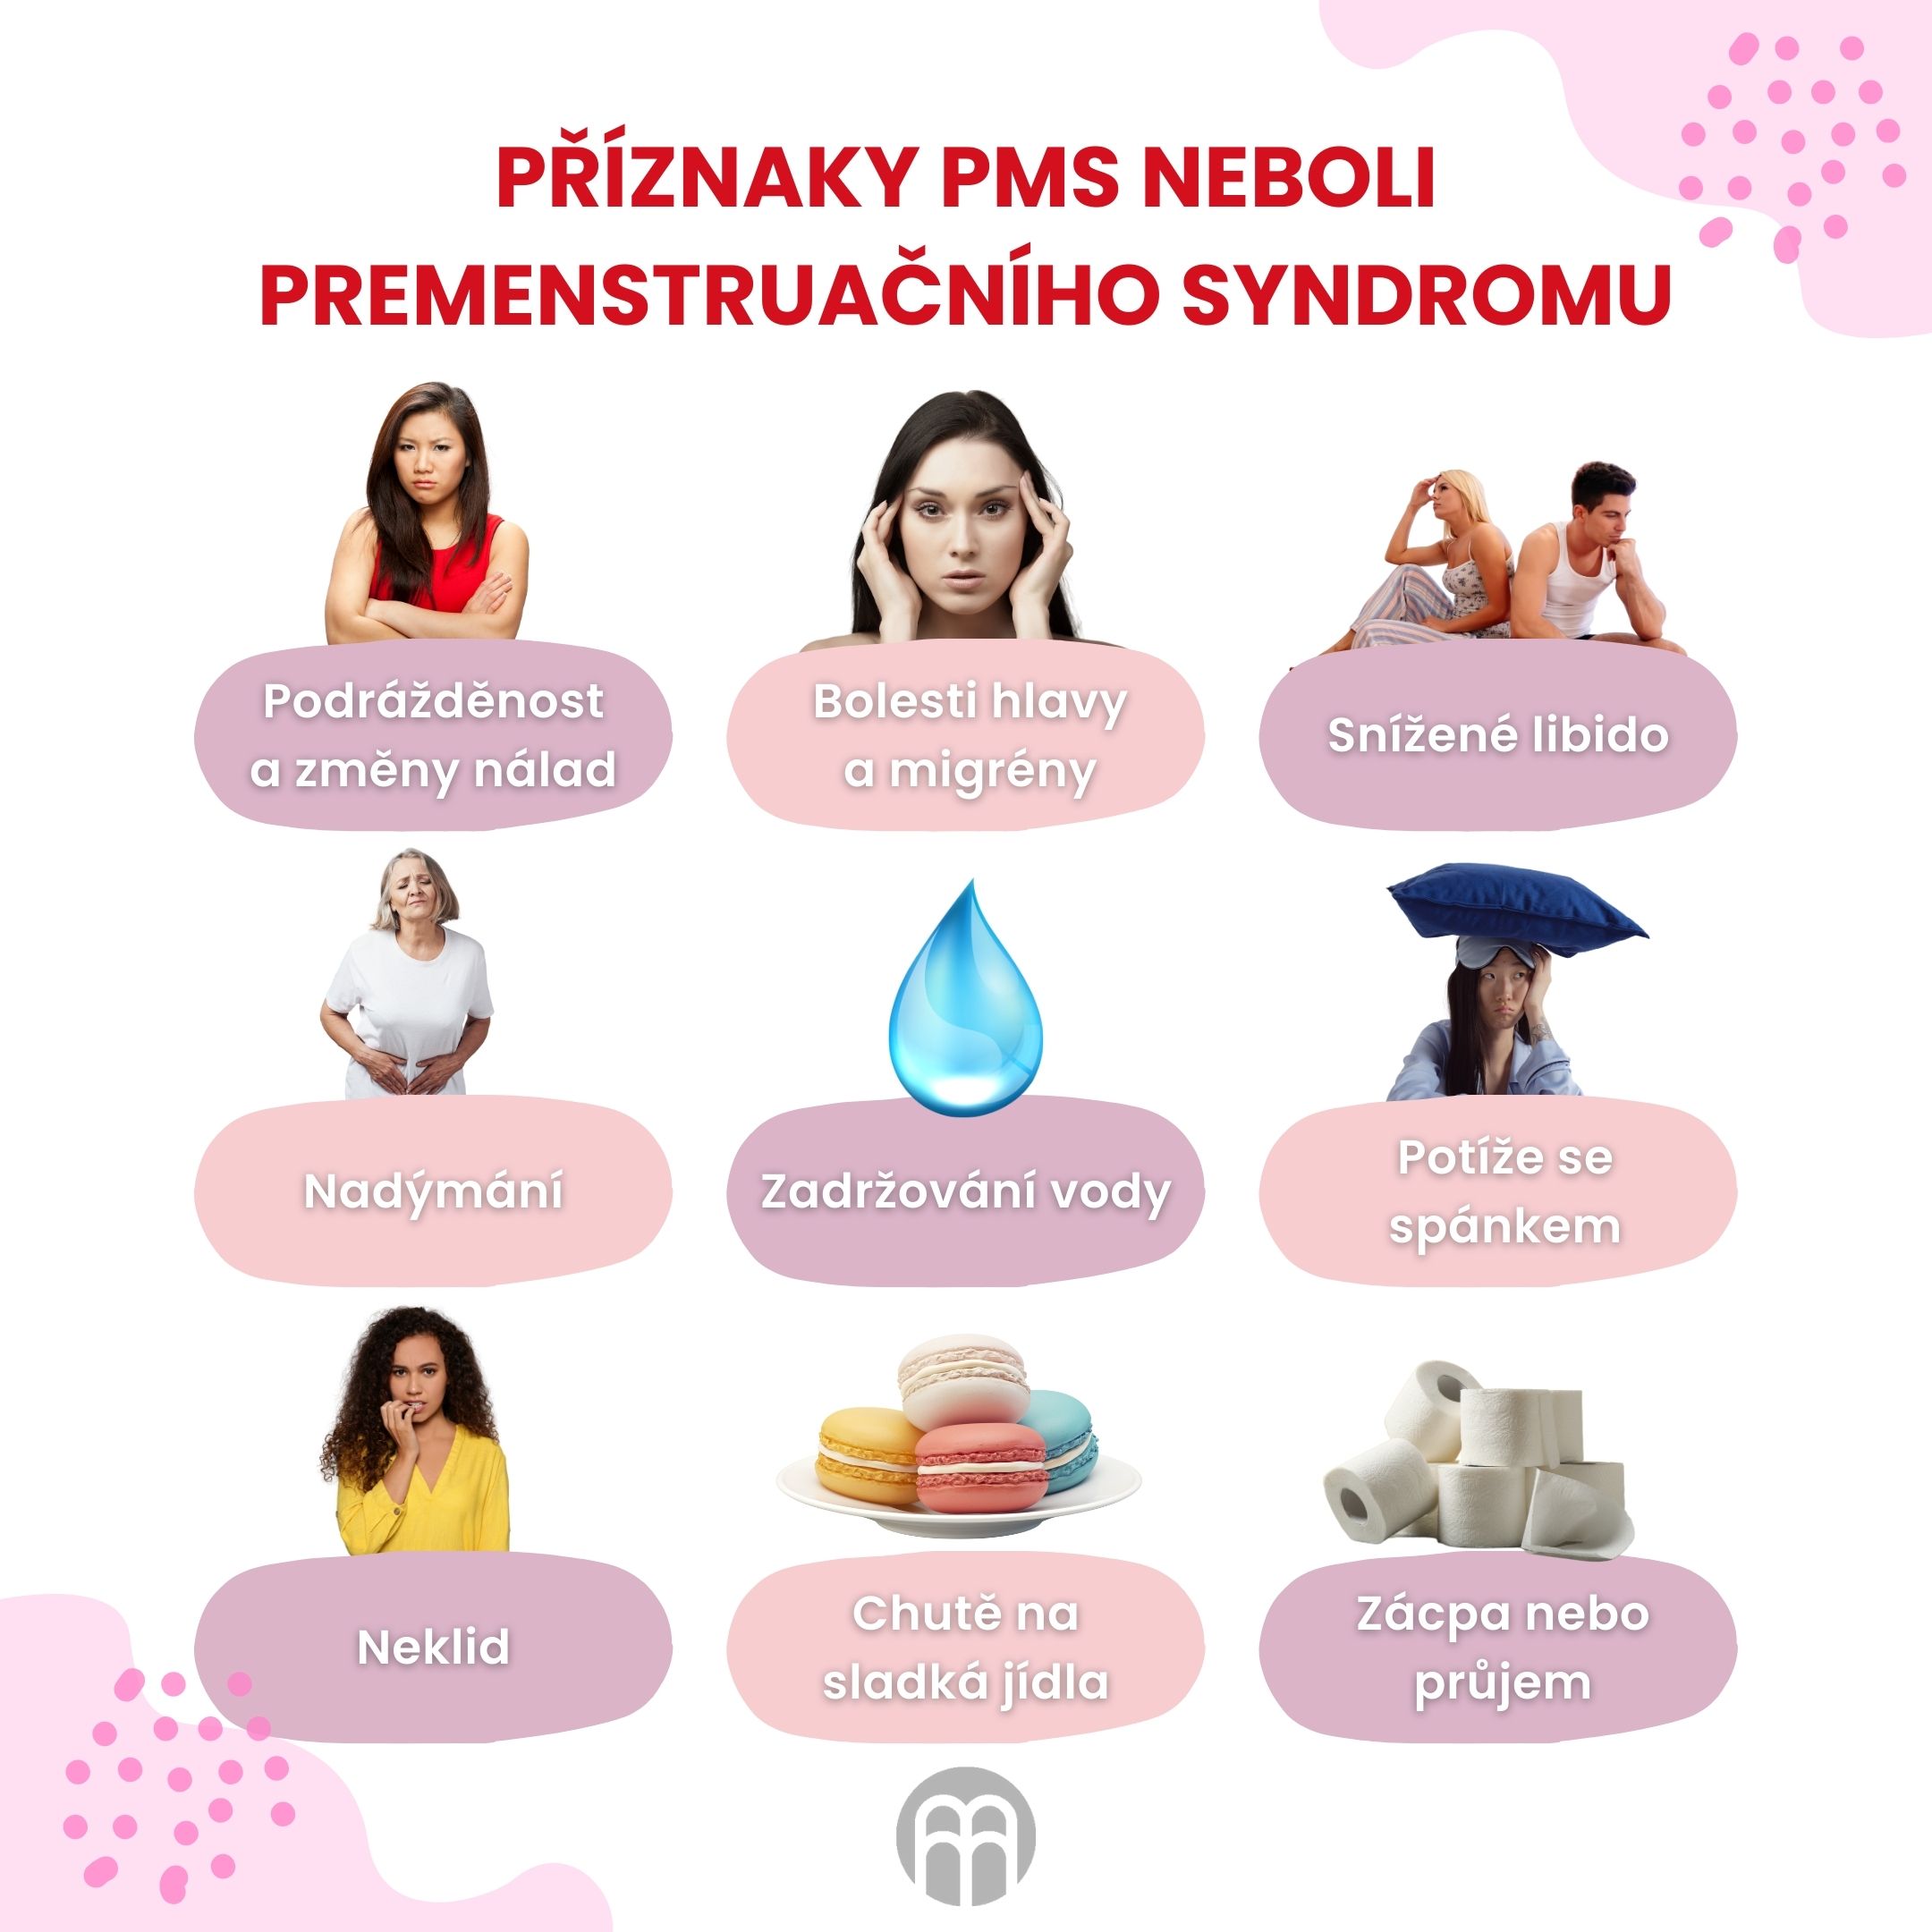 _Příznaky PMS neboli premenstruačního syndromu